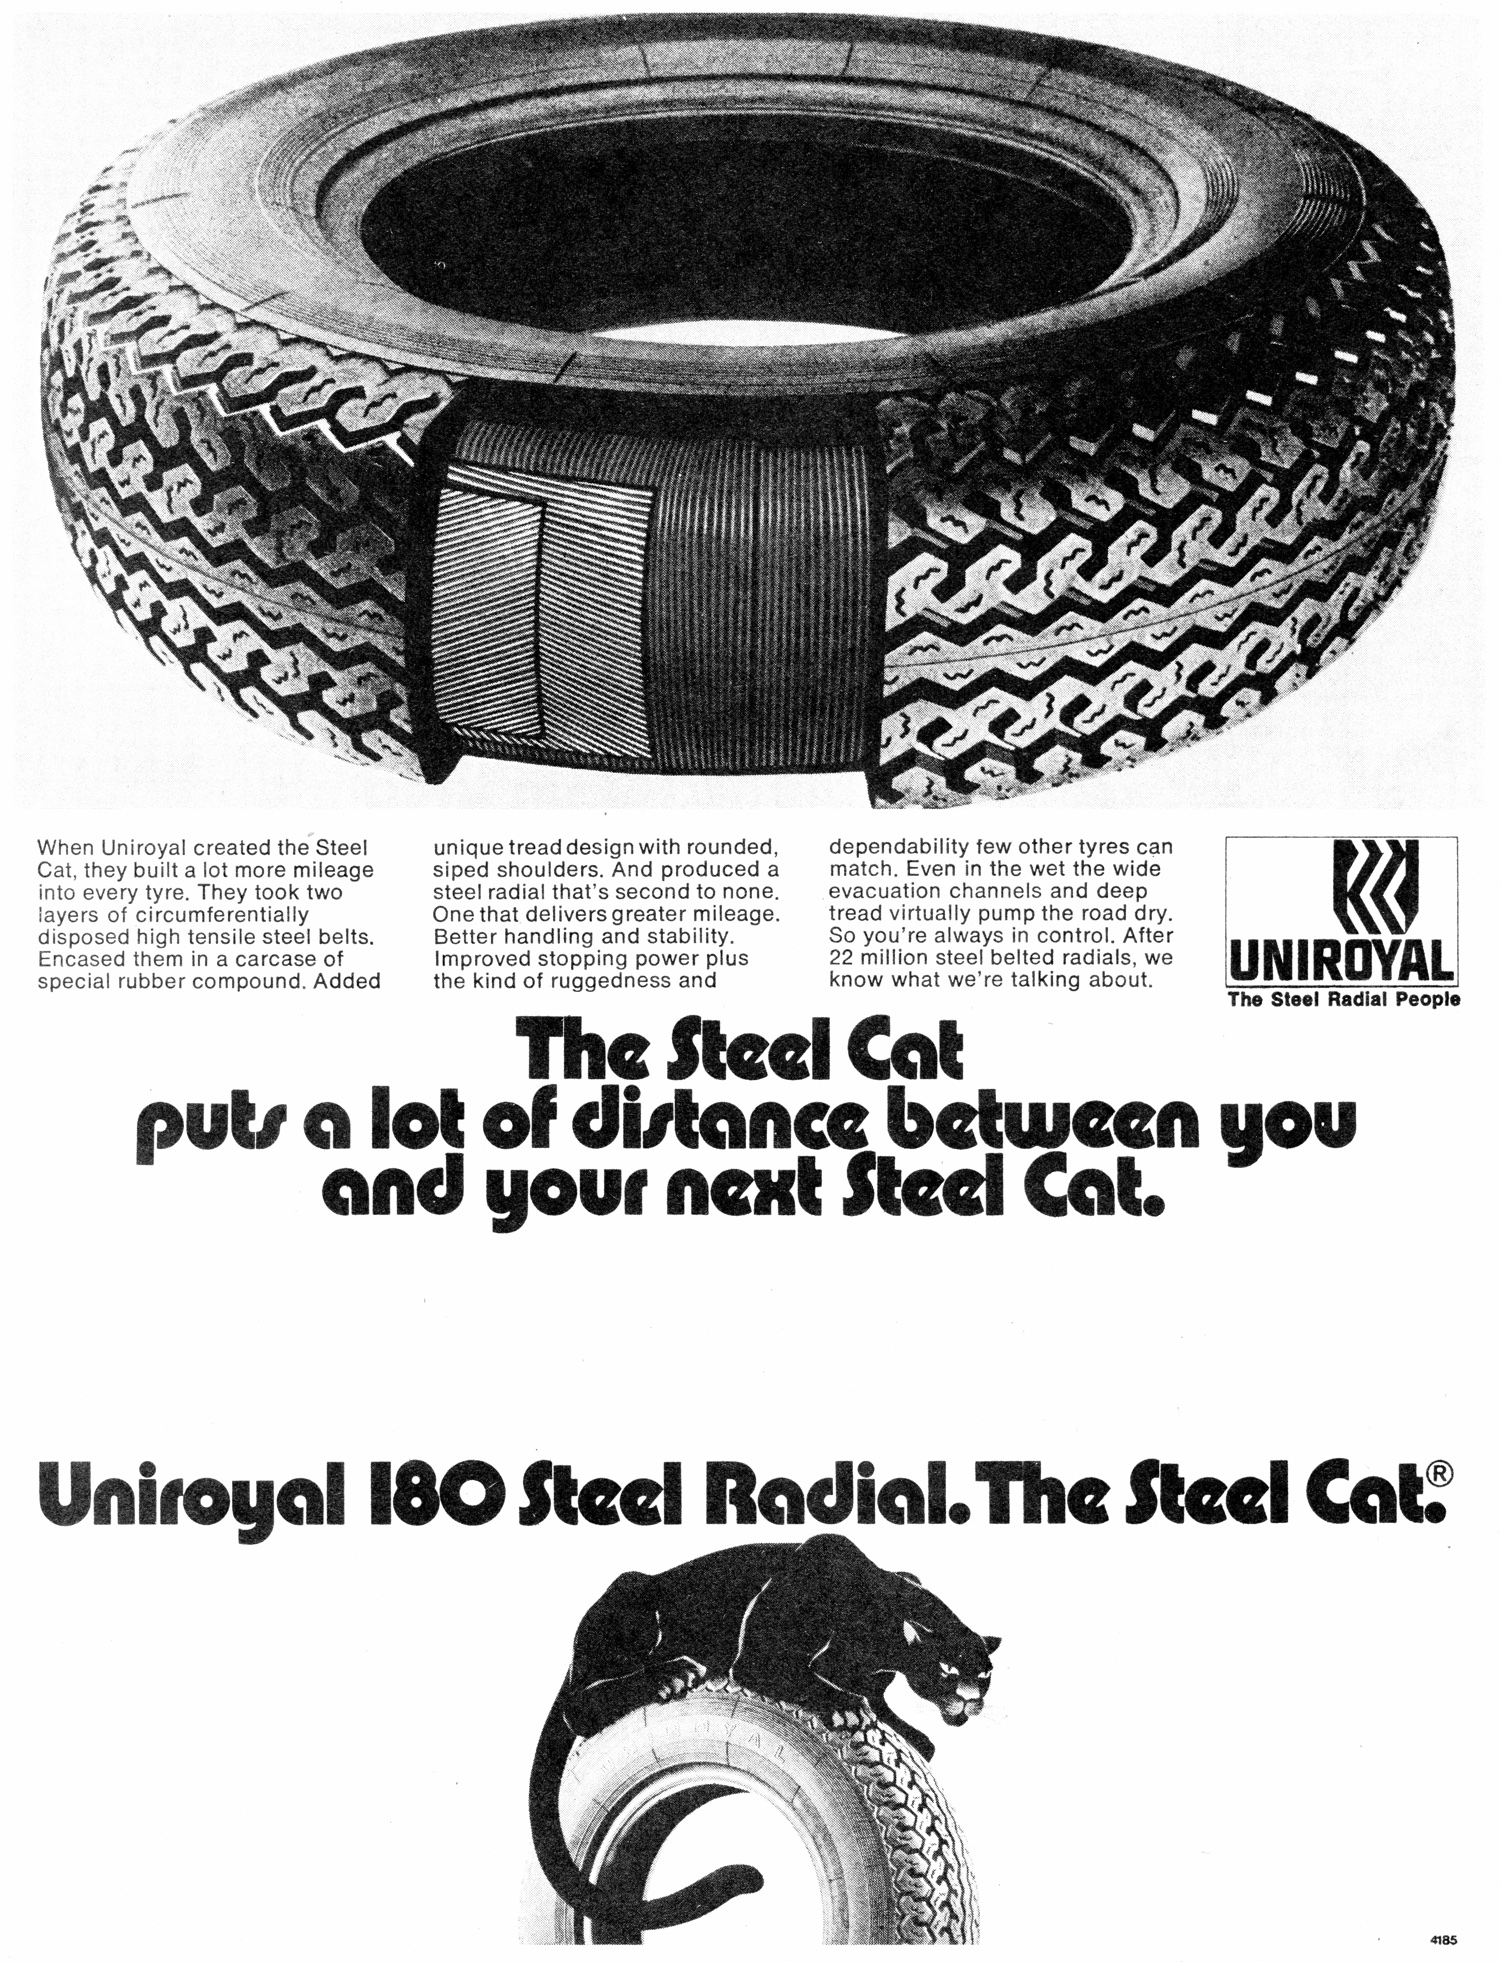 1974 Uniroyal Steel Cat Radials